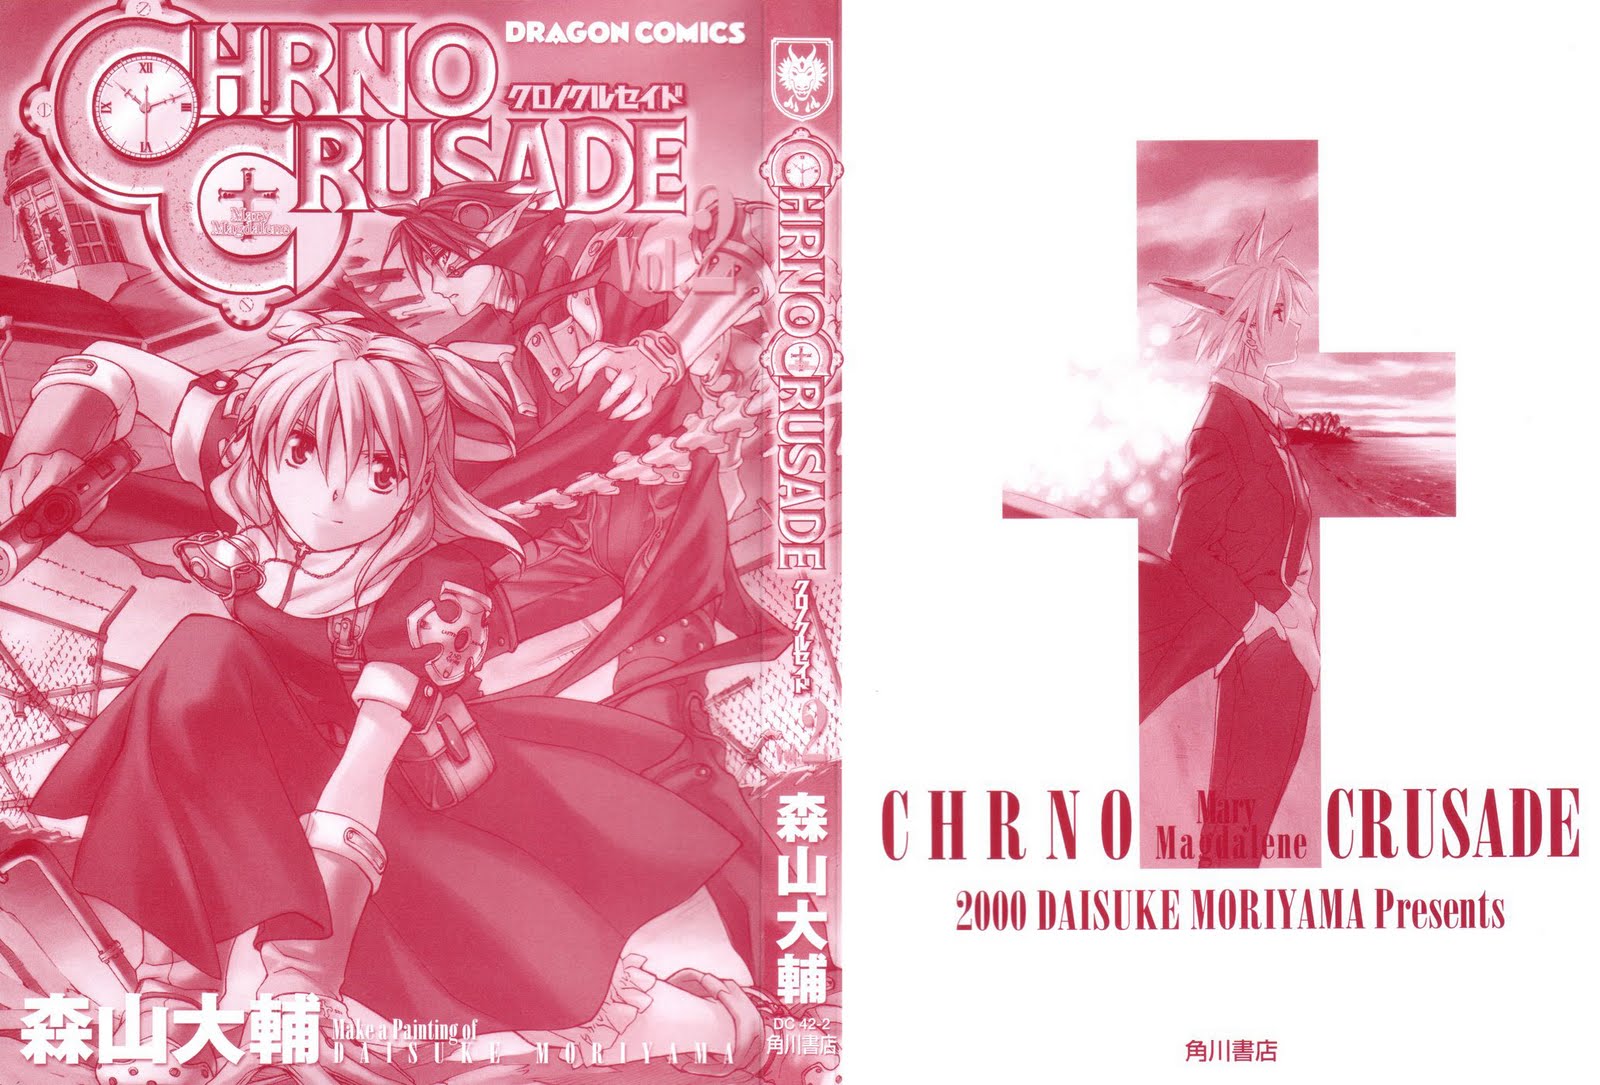 [Manga] Chrono Crusade (Đọc online tại SSF) CHRNO-CRUSADE-02-000-e